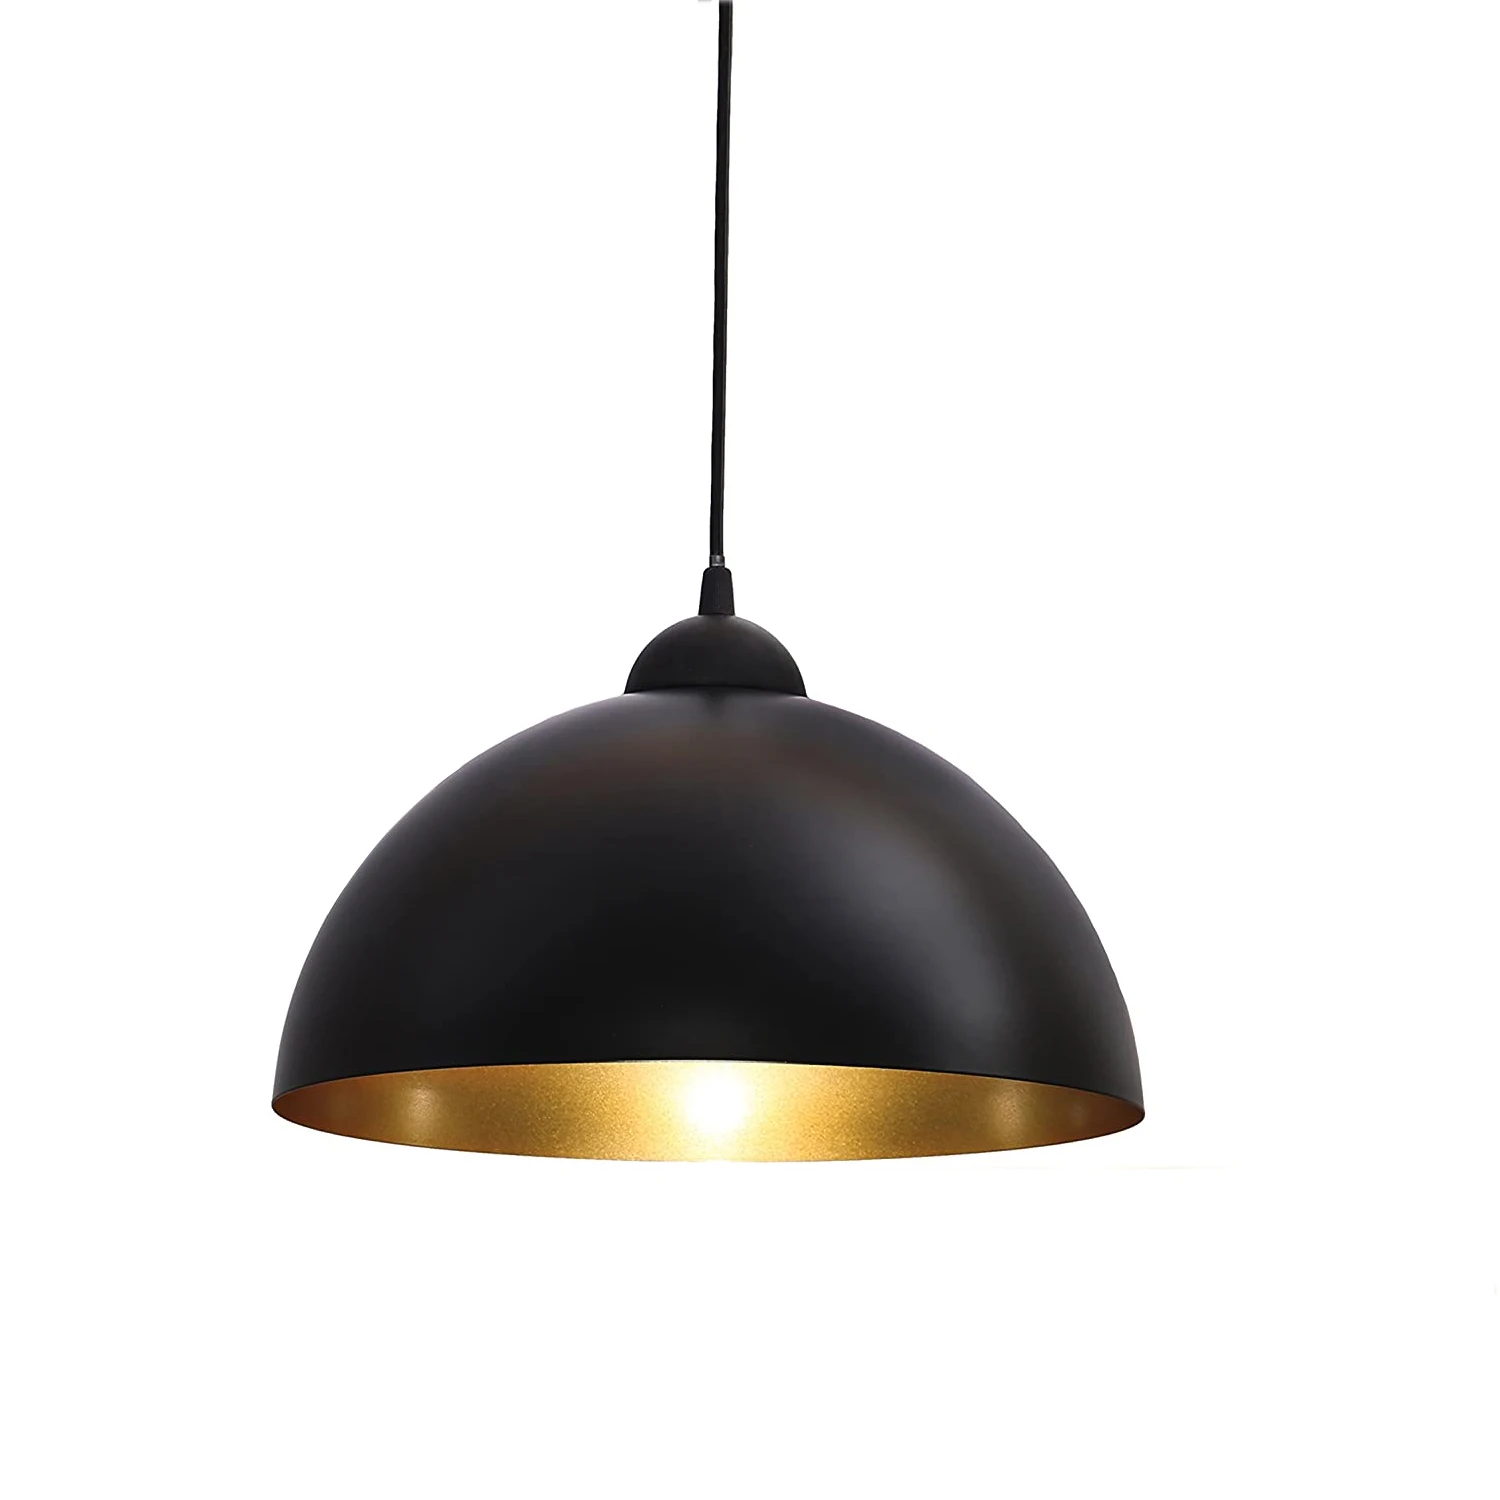 LED Retro Pendant Light E27 Vintage Industrial Ceiling Lighting Black Lamp for Restaurant, Loft,Kitchen, Coffee Shop